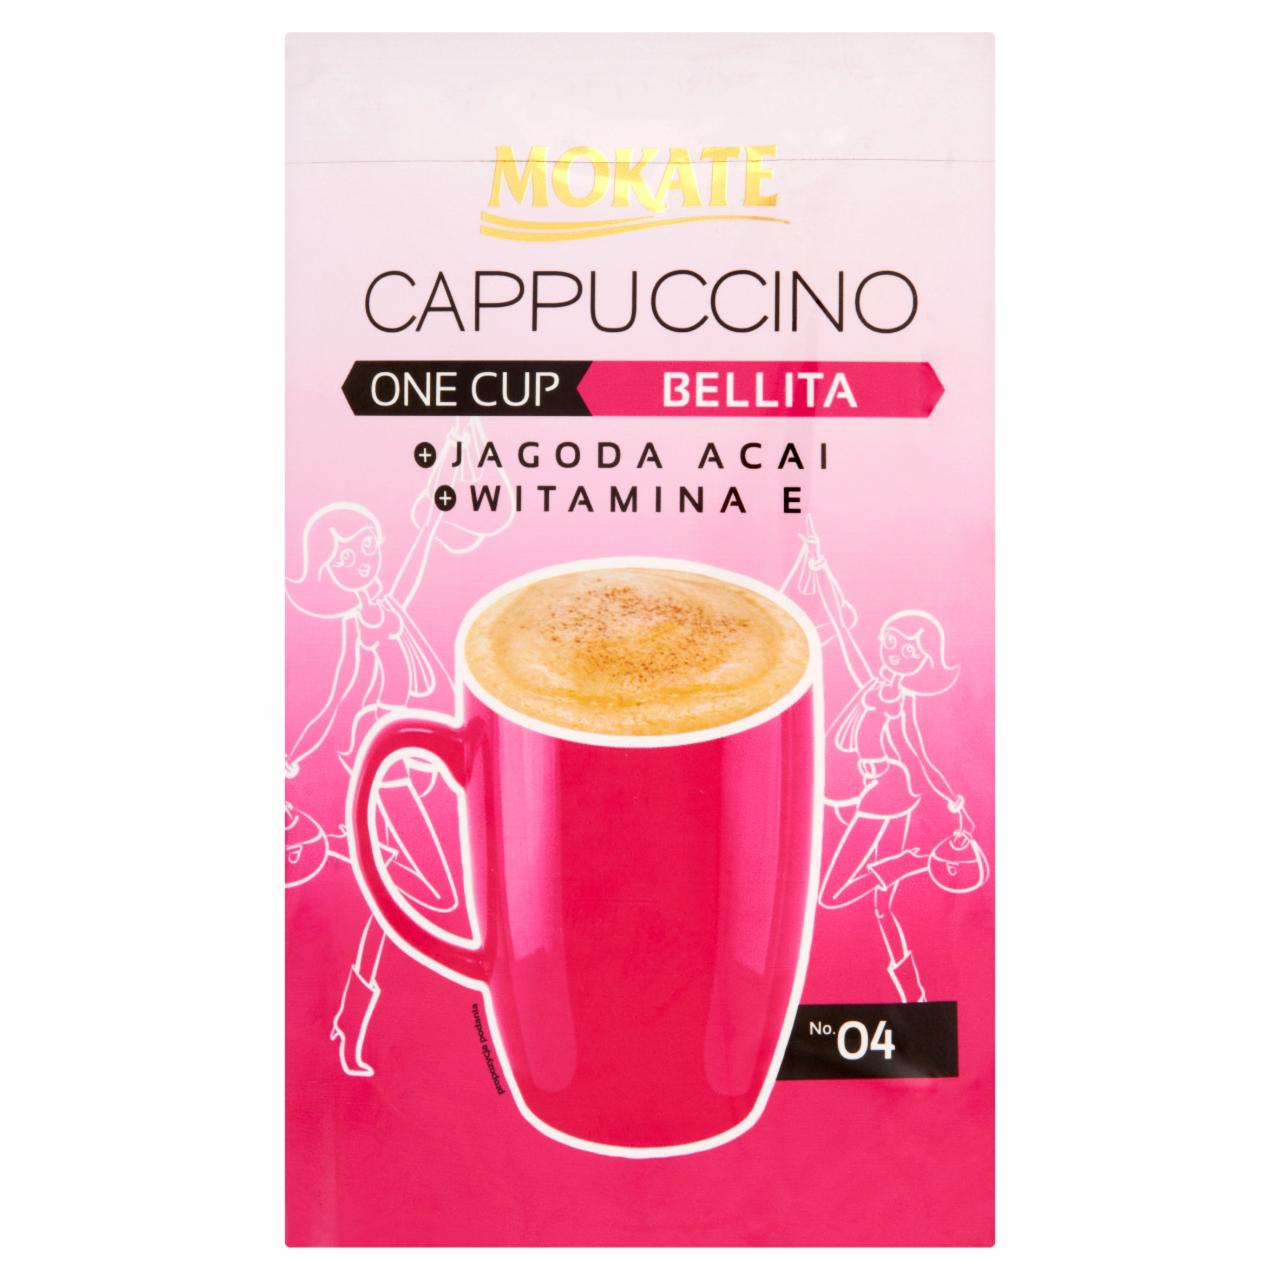 Zdjęcia - Mokate Cappuccino One Cup Bellita 20 g